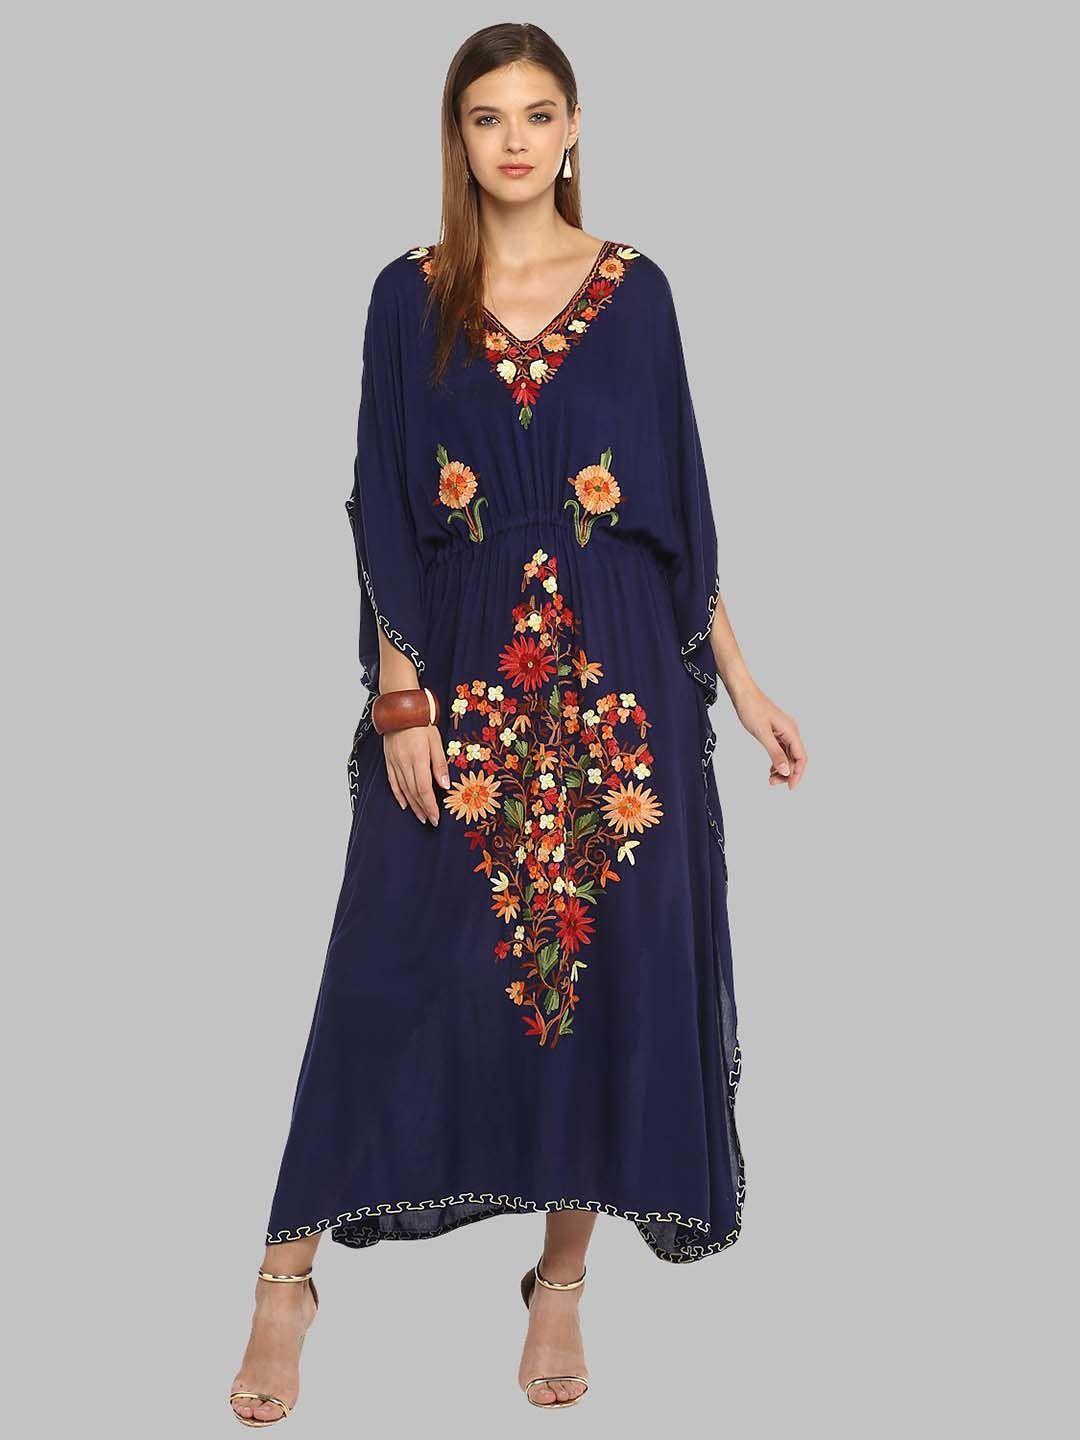 craftbazar floral embroidered kimono sleeve kaftan maxi dress